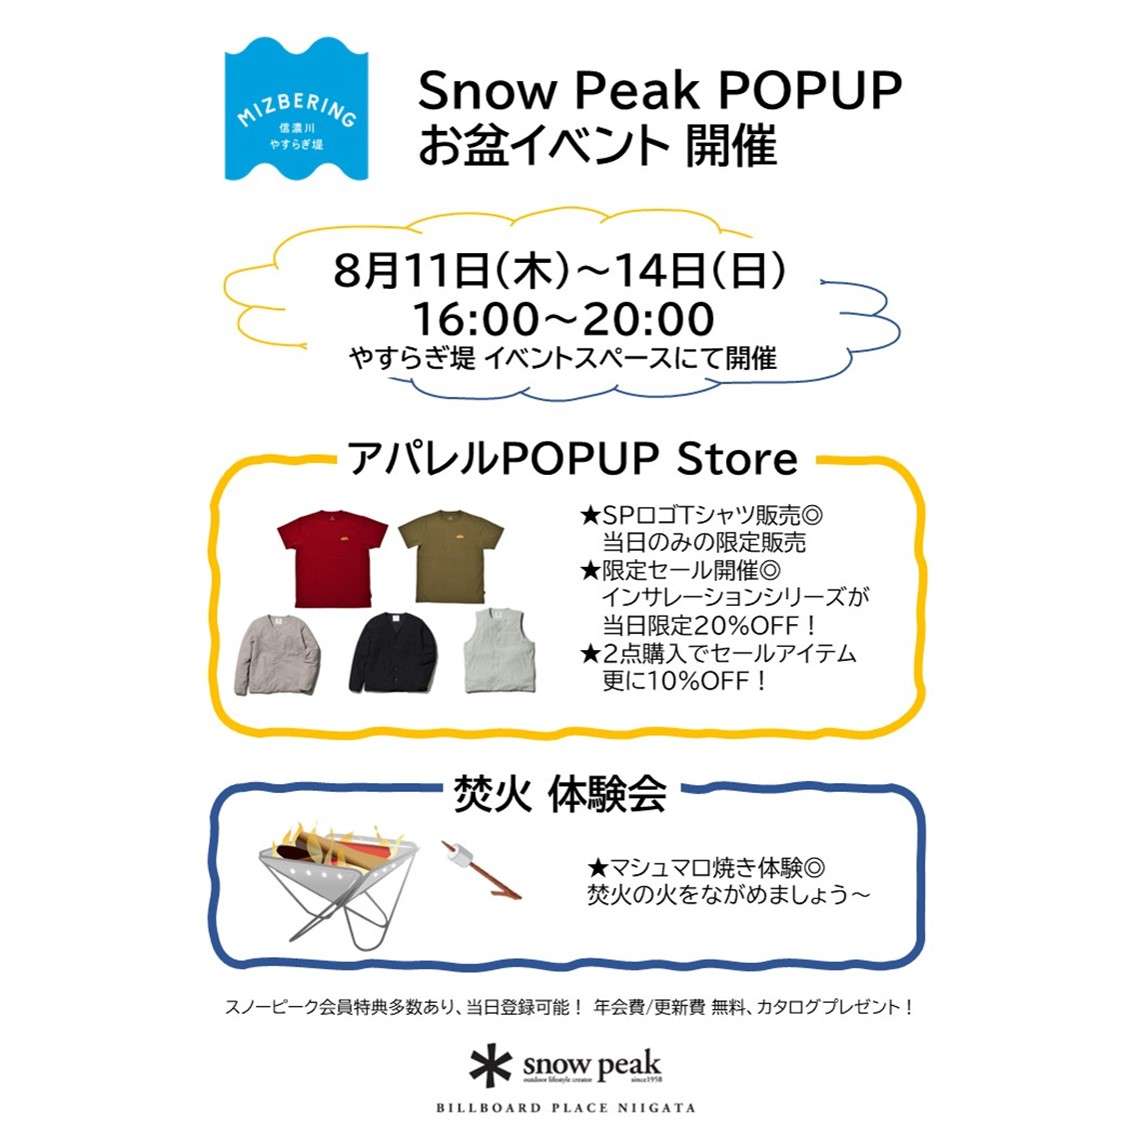 【8.14更新】8.11-14 Snow Peak Pop-up Store 開催